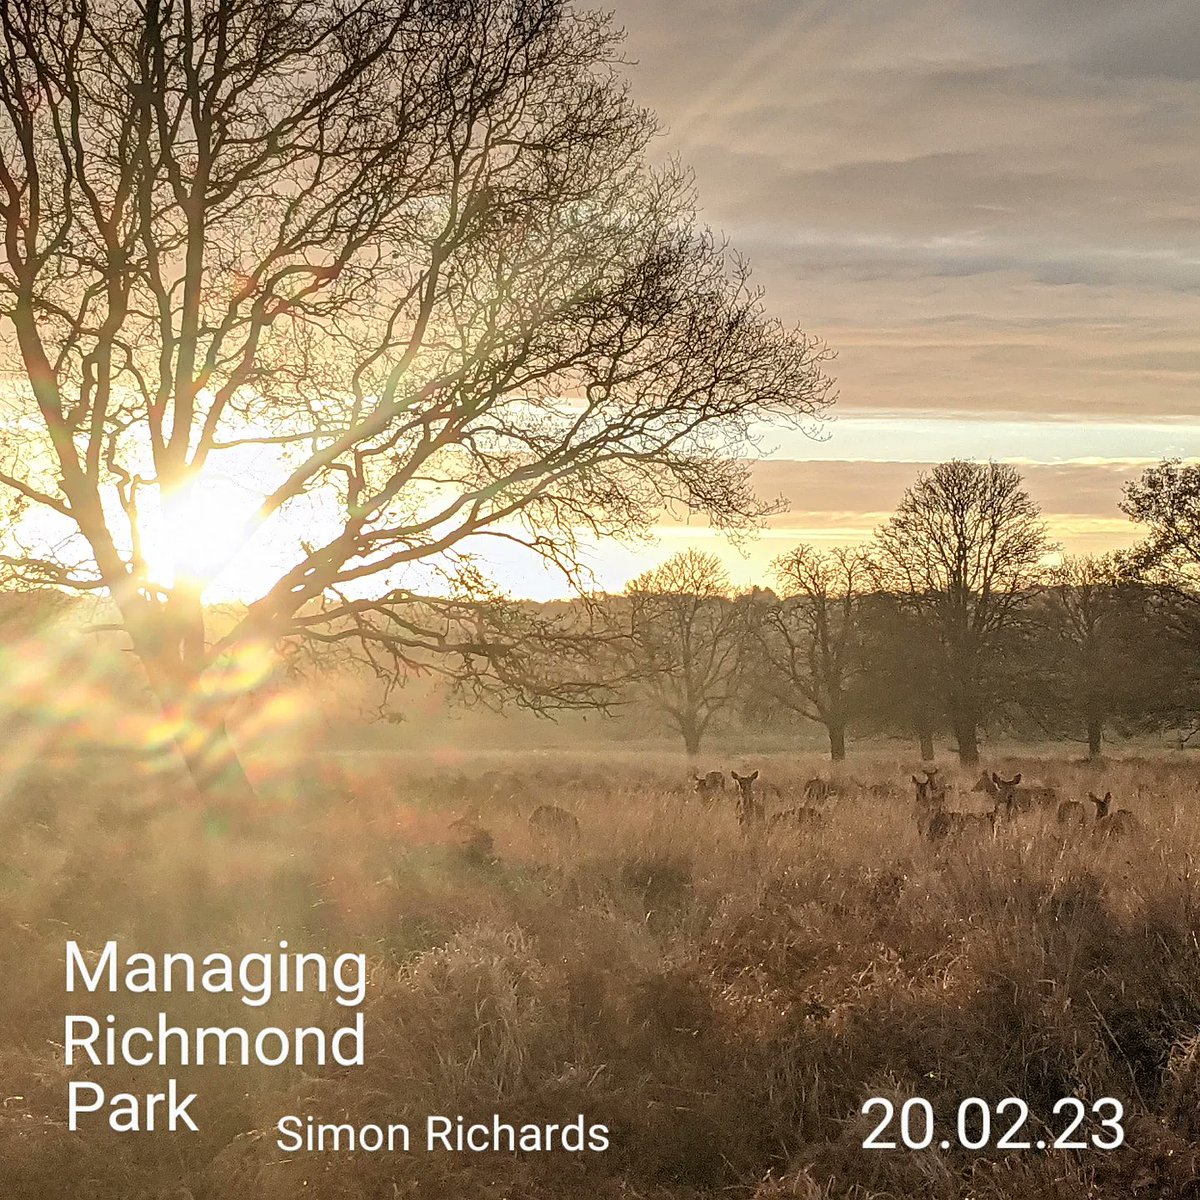 Tomorrow, Simon Richards joins us to talk about managing National Nature Reserve, Richmond Park. 6PM Live & Online KMIS.eventbrite.co.uk #kewgardens #kmis